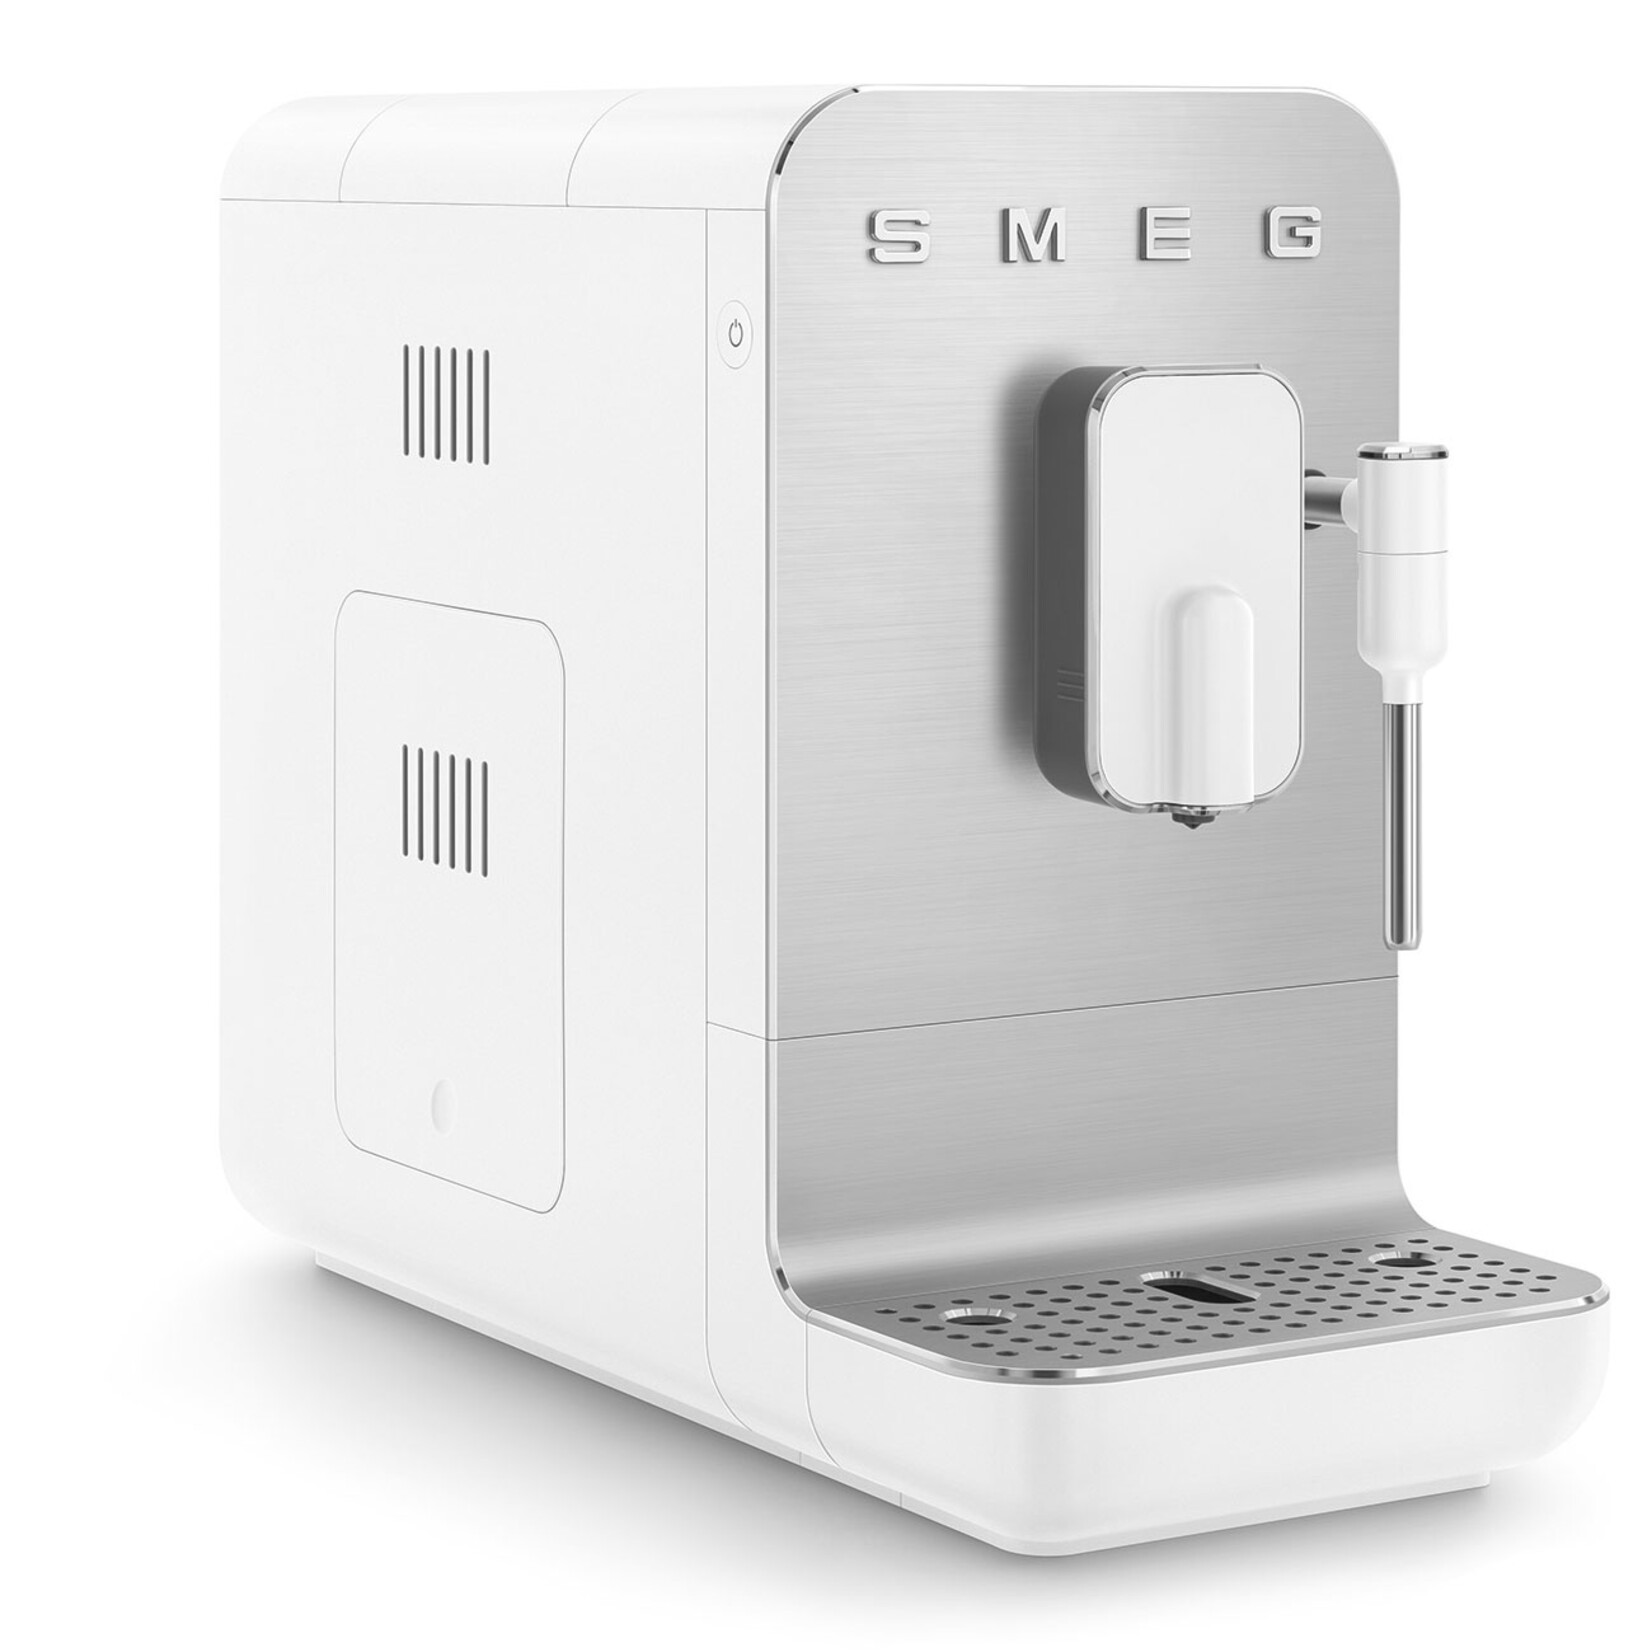 SMEG SMEG espressomachine medium, mat wit, met stoomfunctie, BCC12WHMEU